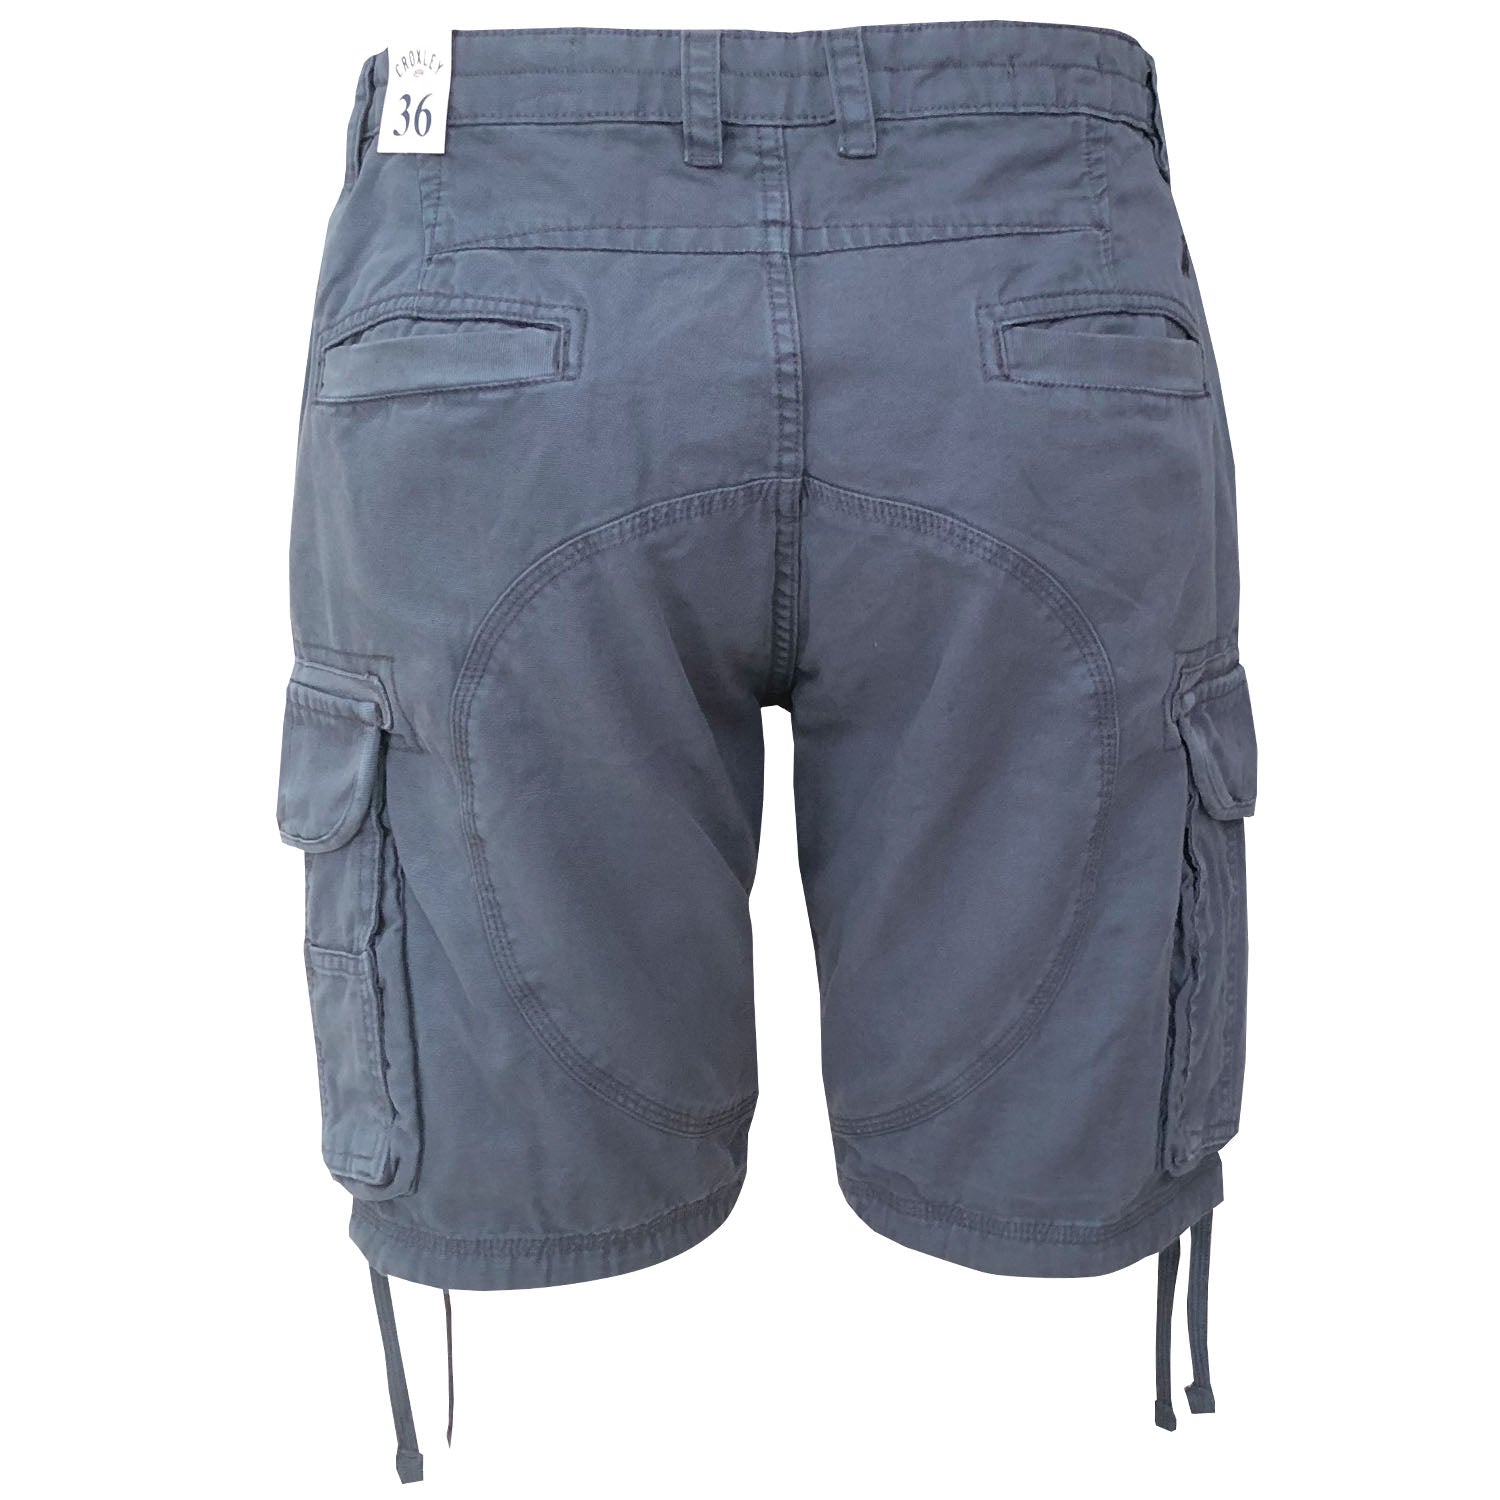 Croxley - Cargo Shorts - LabelledUp.com